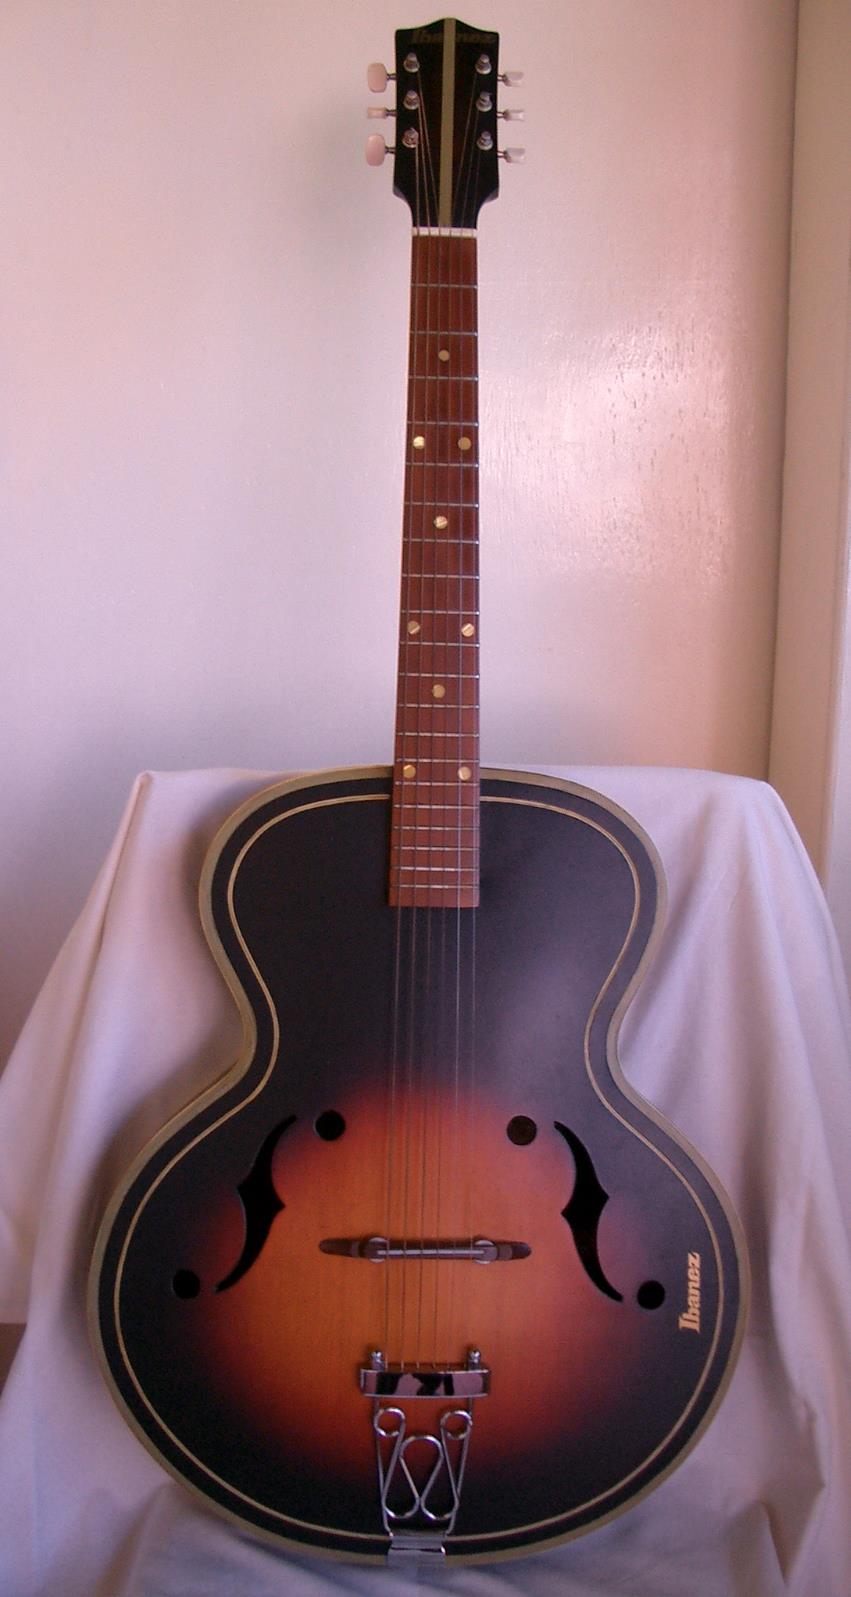 Restored Ibanez Acoustic Guitar